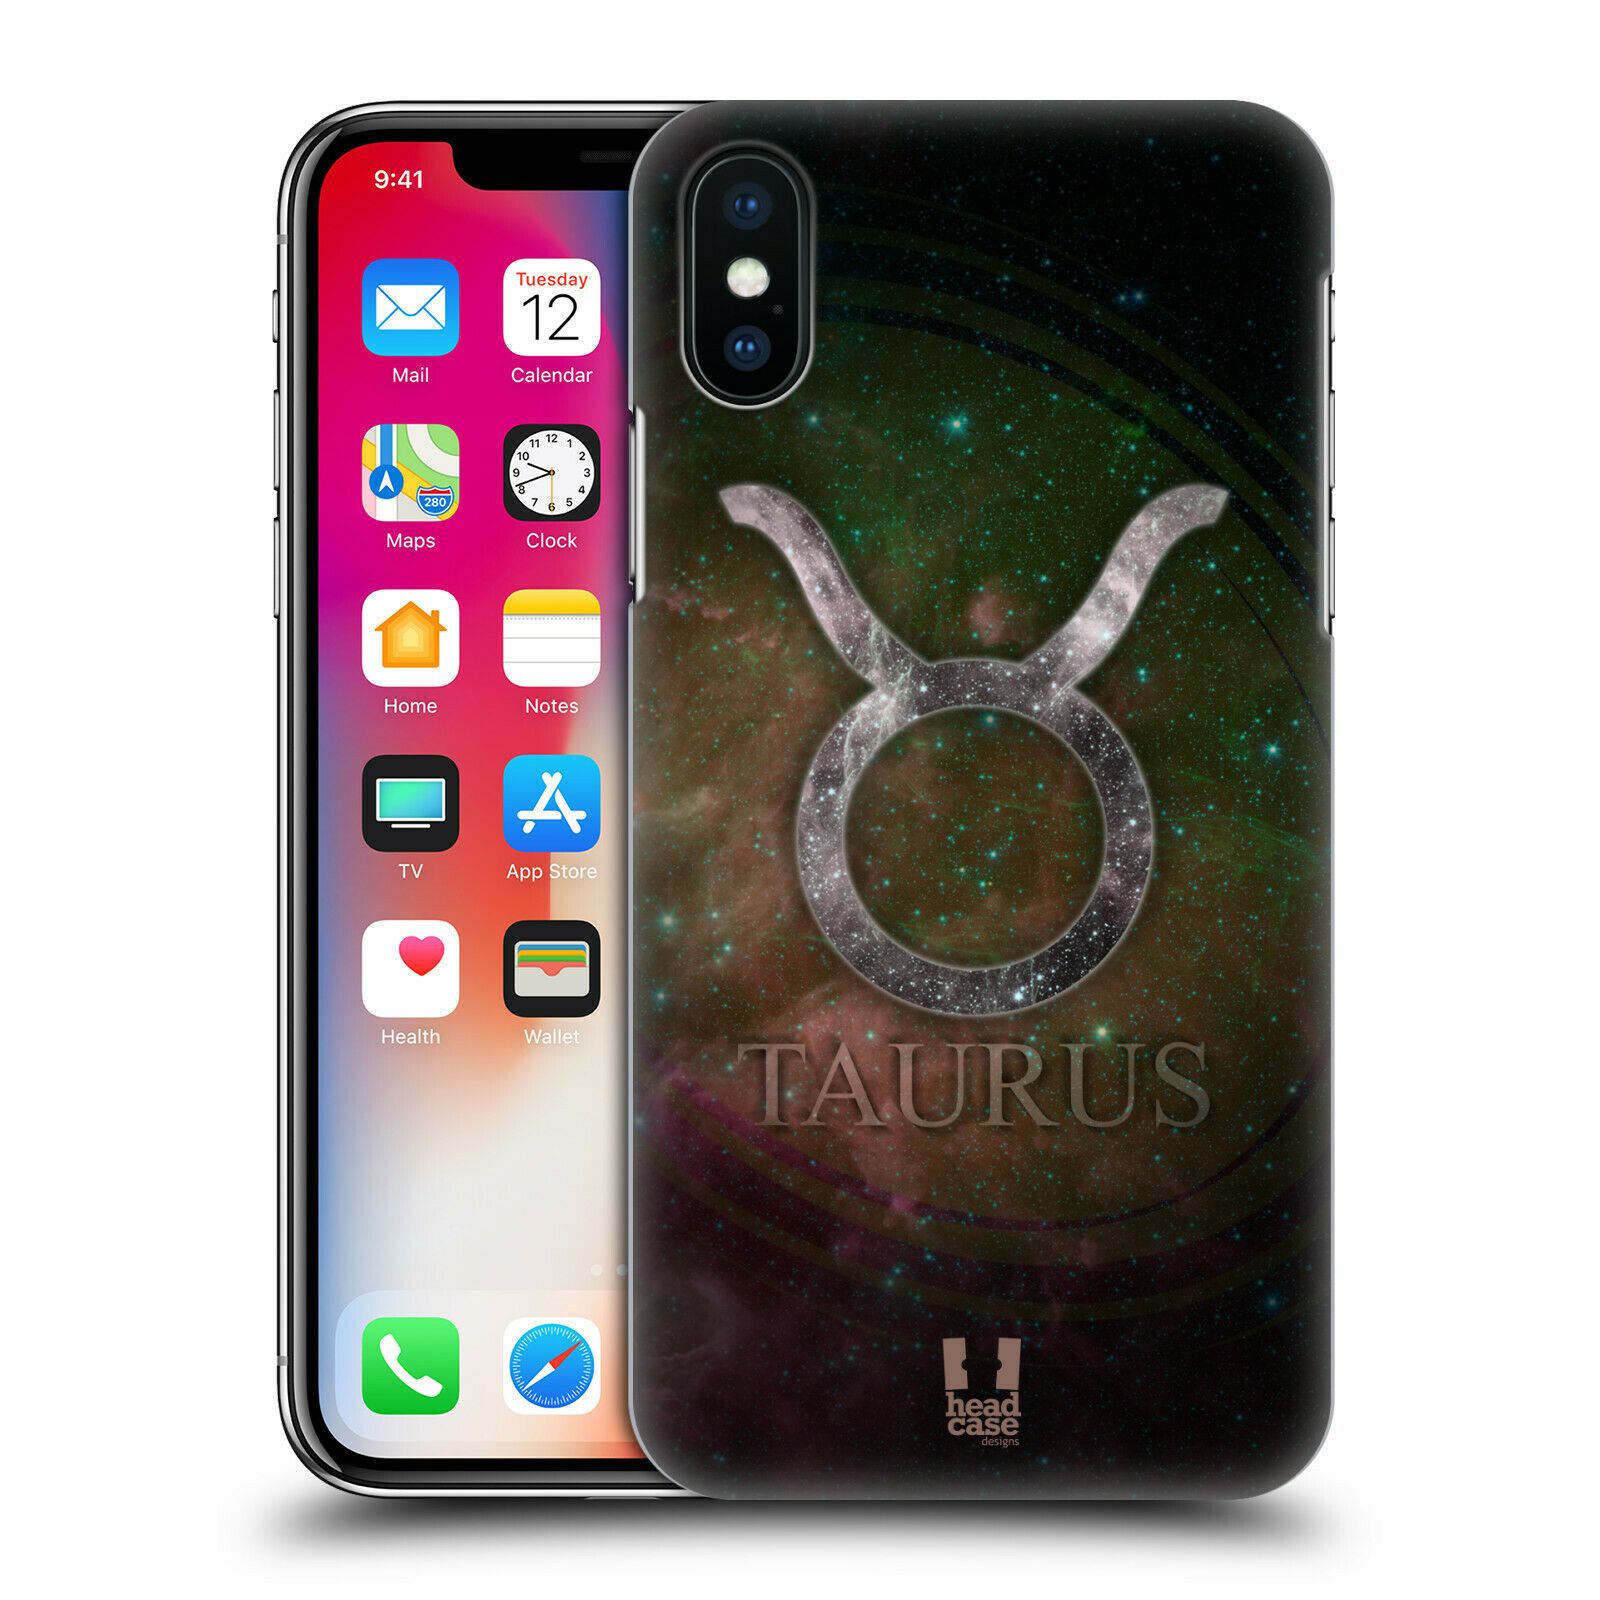 HEAD CASE DESIGNS NEBULA ZODIAC SYMBOLS BACK CASE FOR APPLE iPHONE PHONES iPhone Cases AtlasCase Taurus iPhone 4 